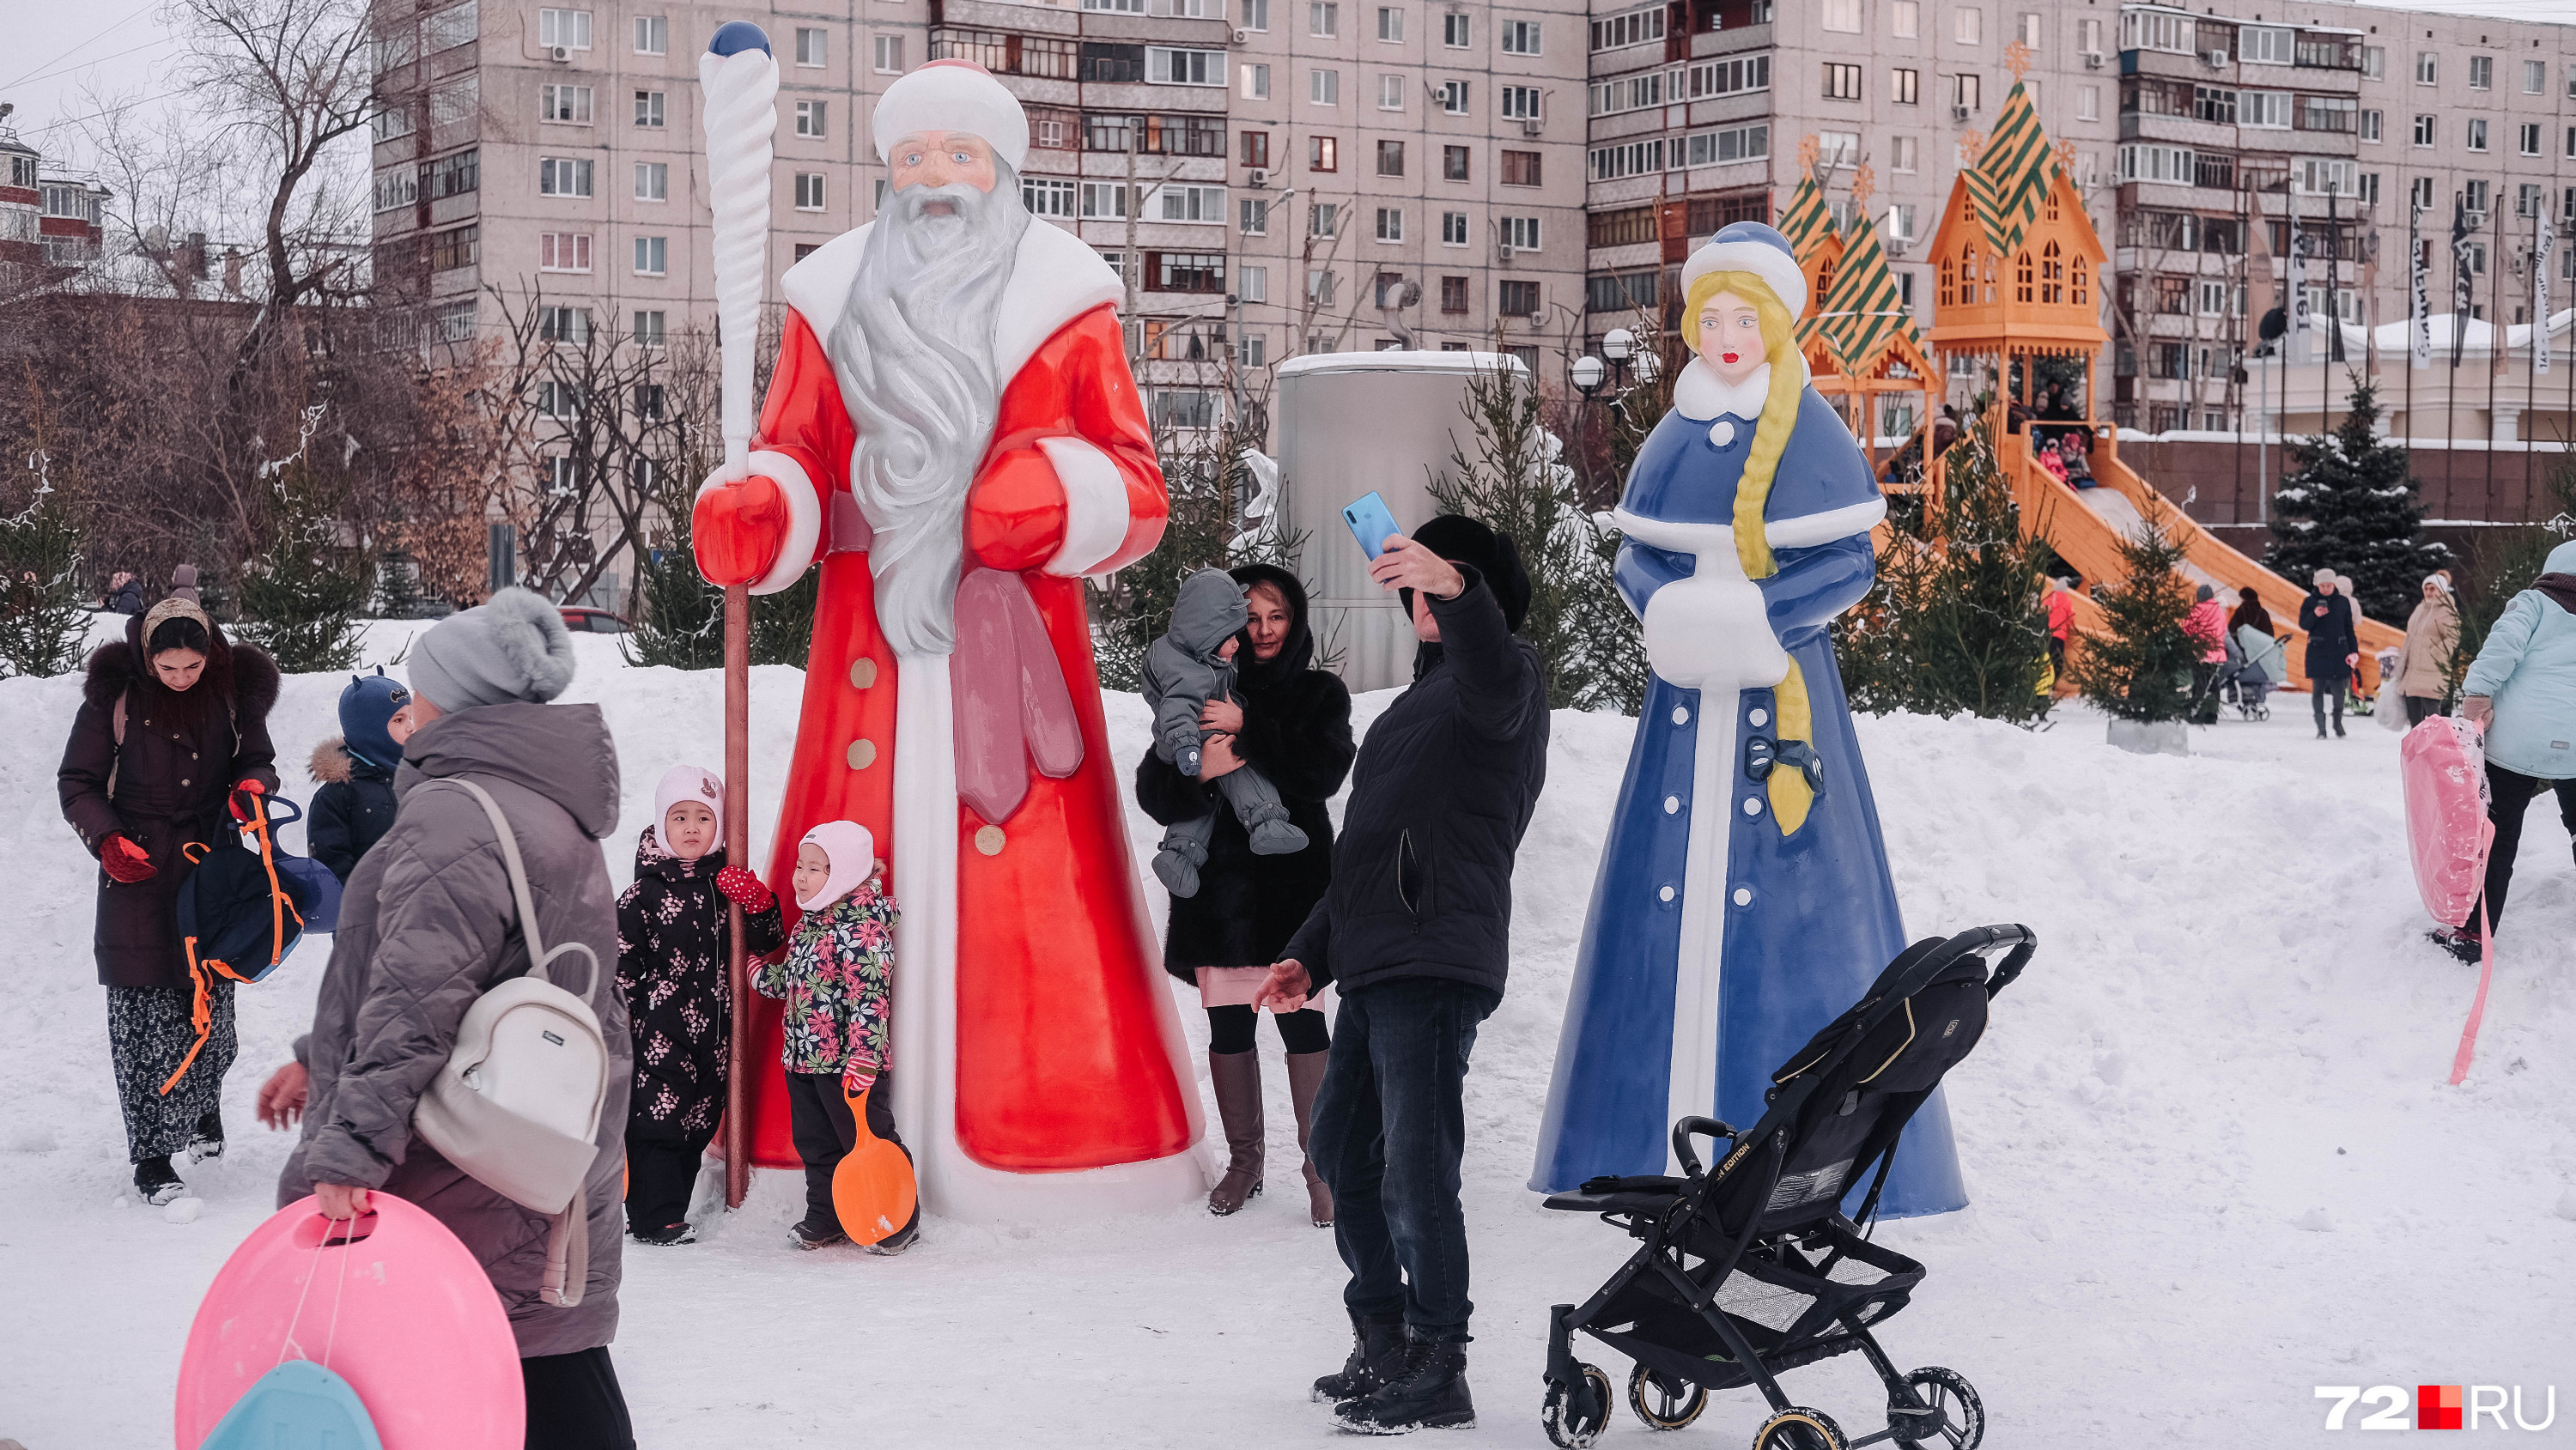 Фотографировались люди и возле скульптур Деда Мороза и Снегурки